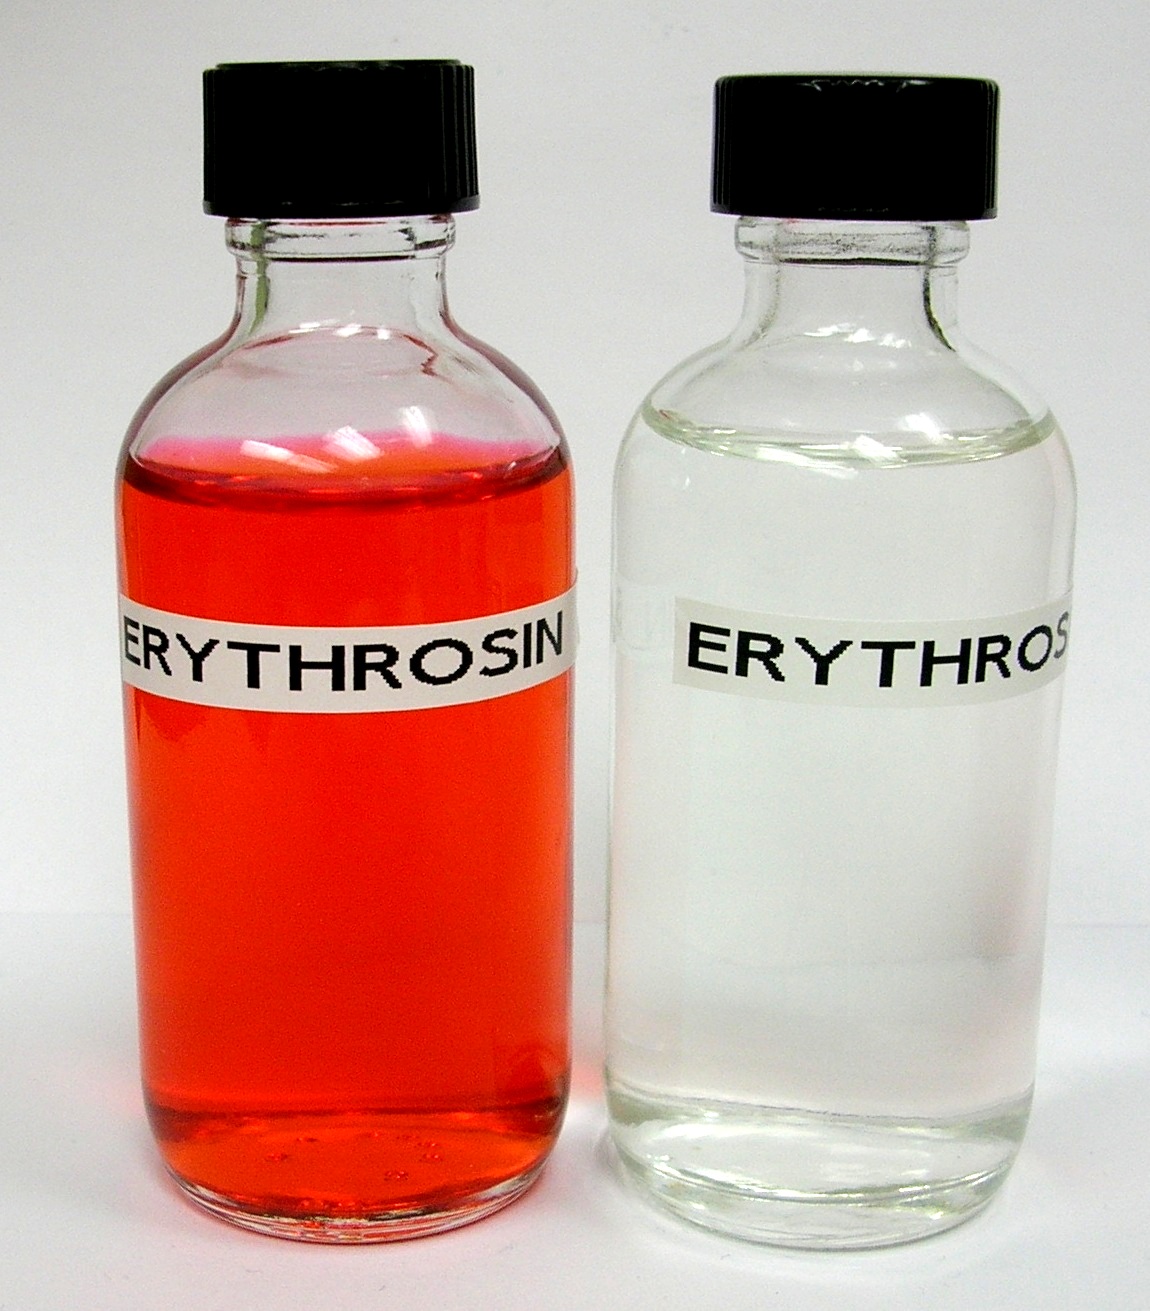 Erythrosin dye decoloration by Catalytic Advanced Oxidation Hydrogen Link catalyst